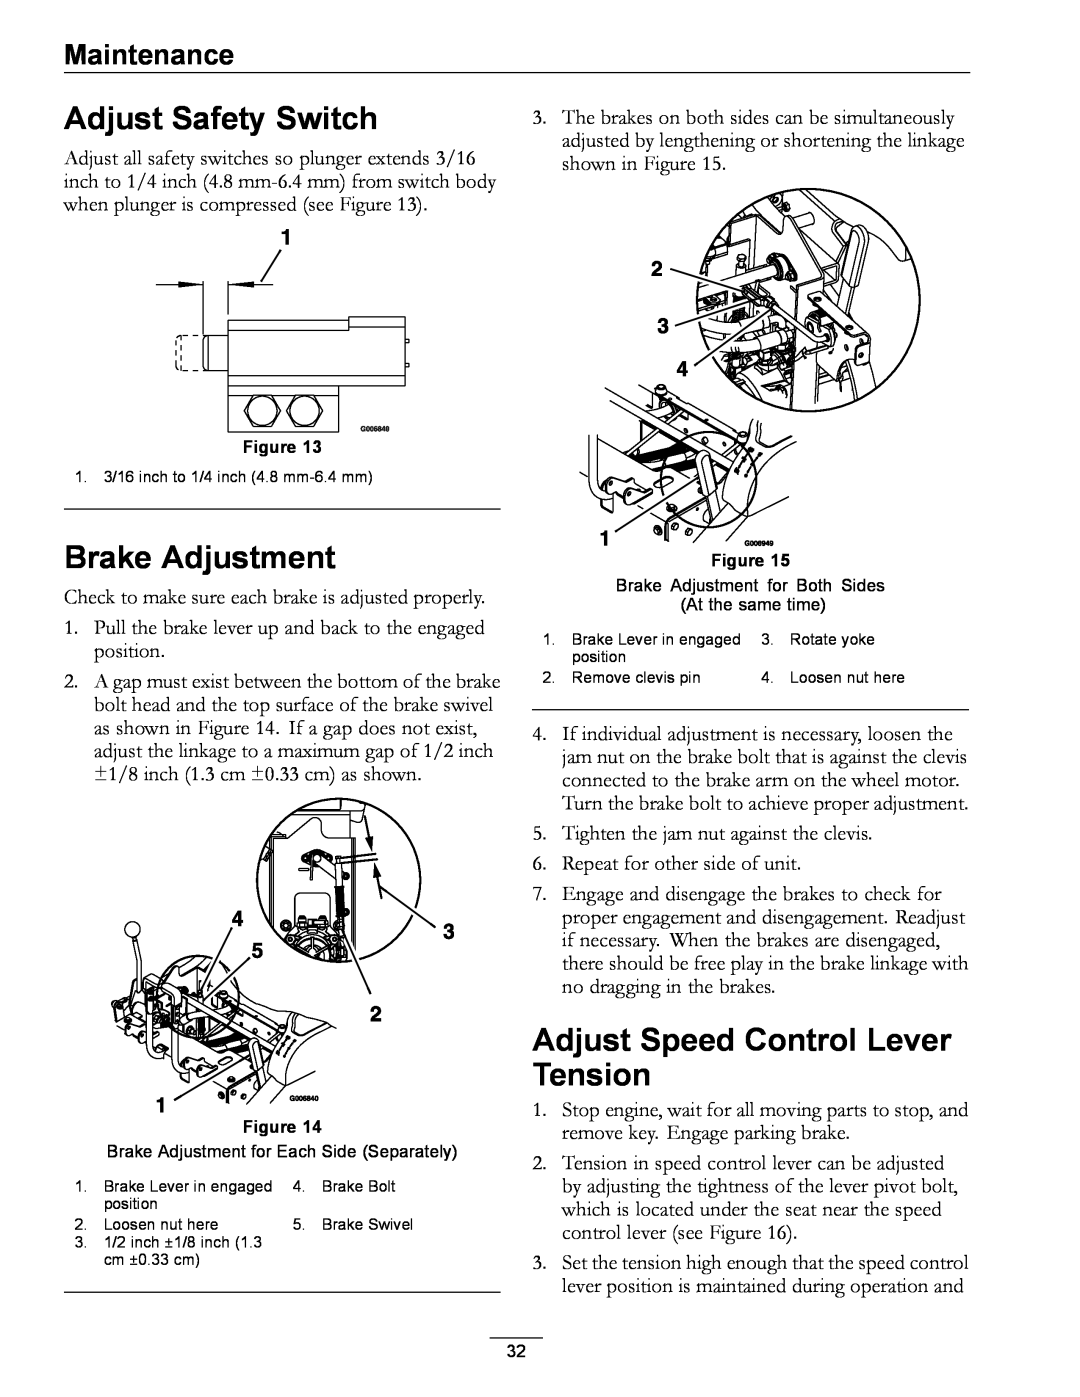 Exmark 850 manual Adjust Safety Switch, Brake Adjustment, Adjust Speed Control Lever Tension, Maintenance 